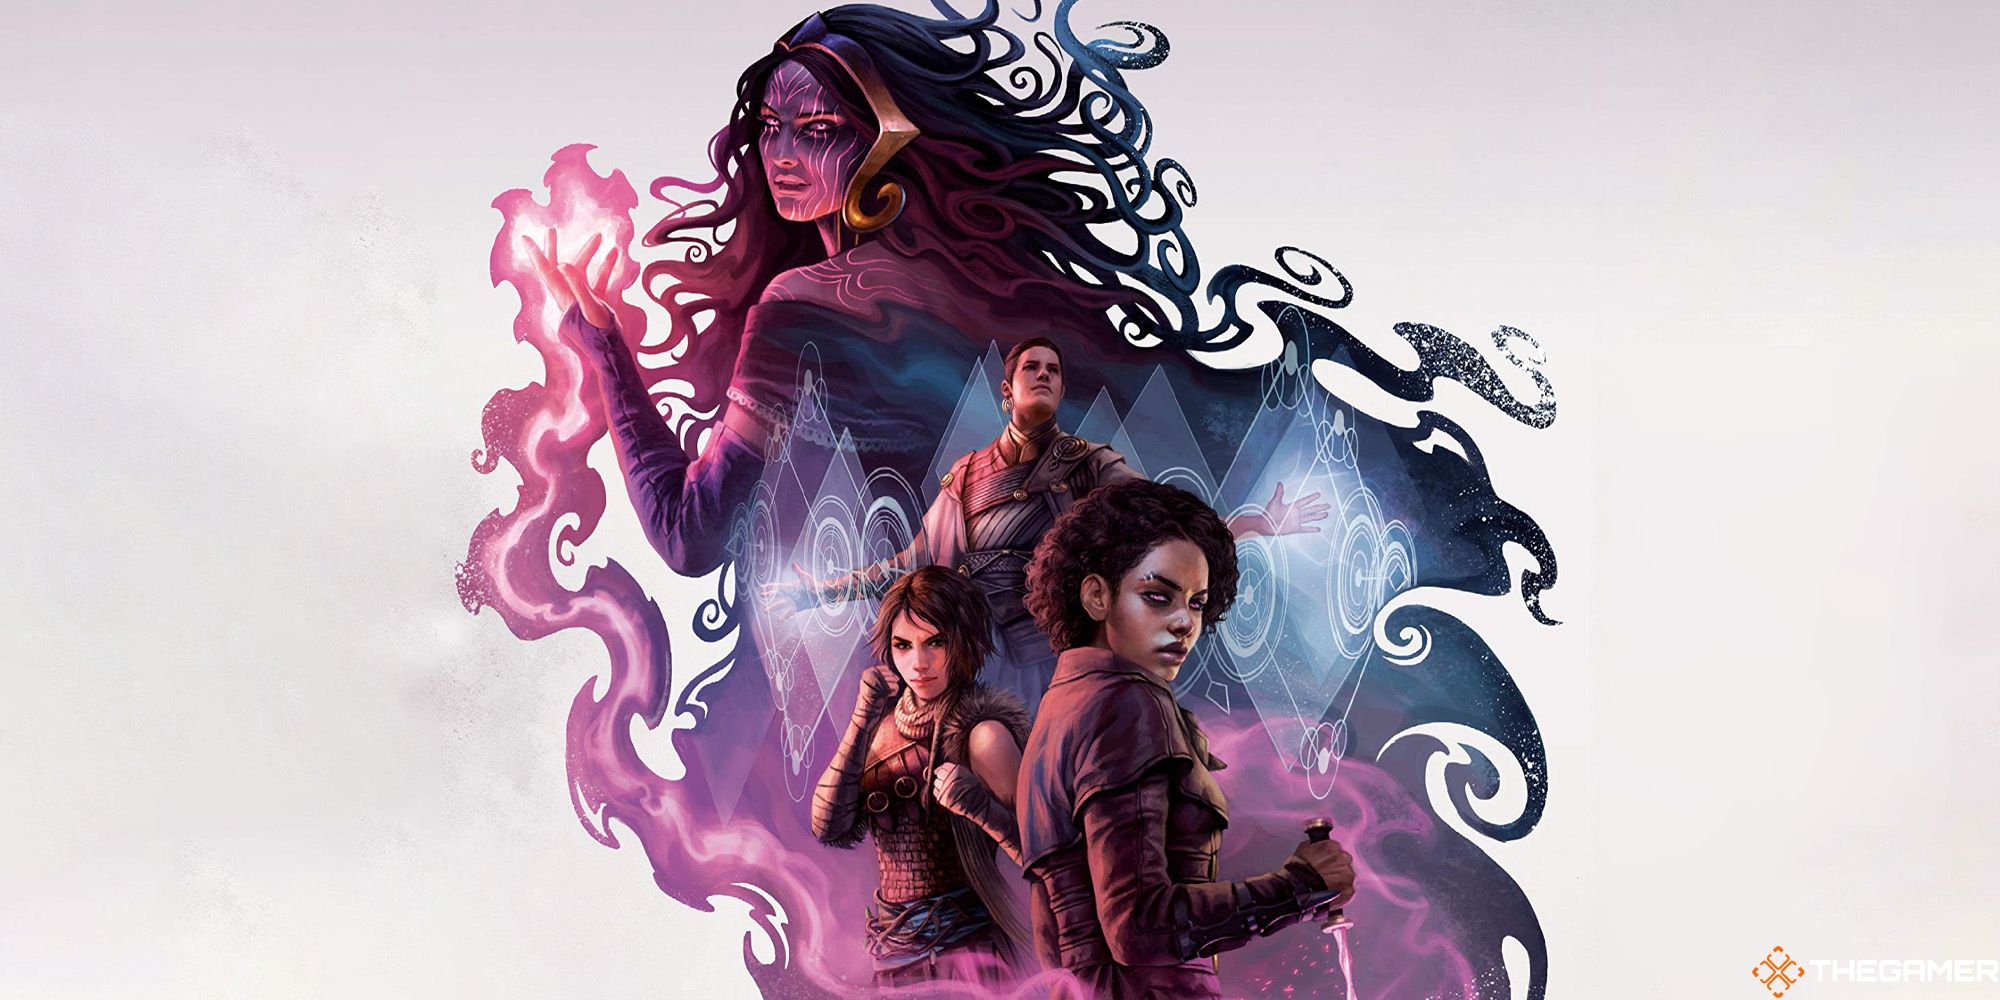 War of the Spark Forsaken Cover Art via Wizards of the Coast